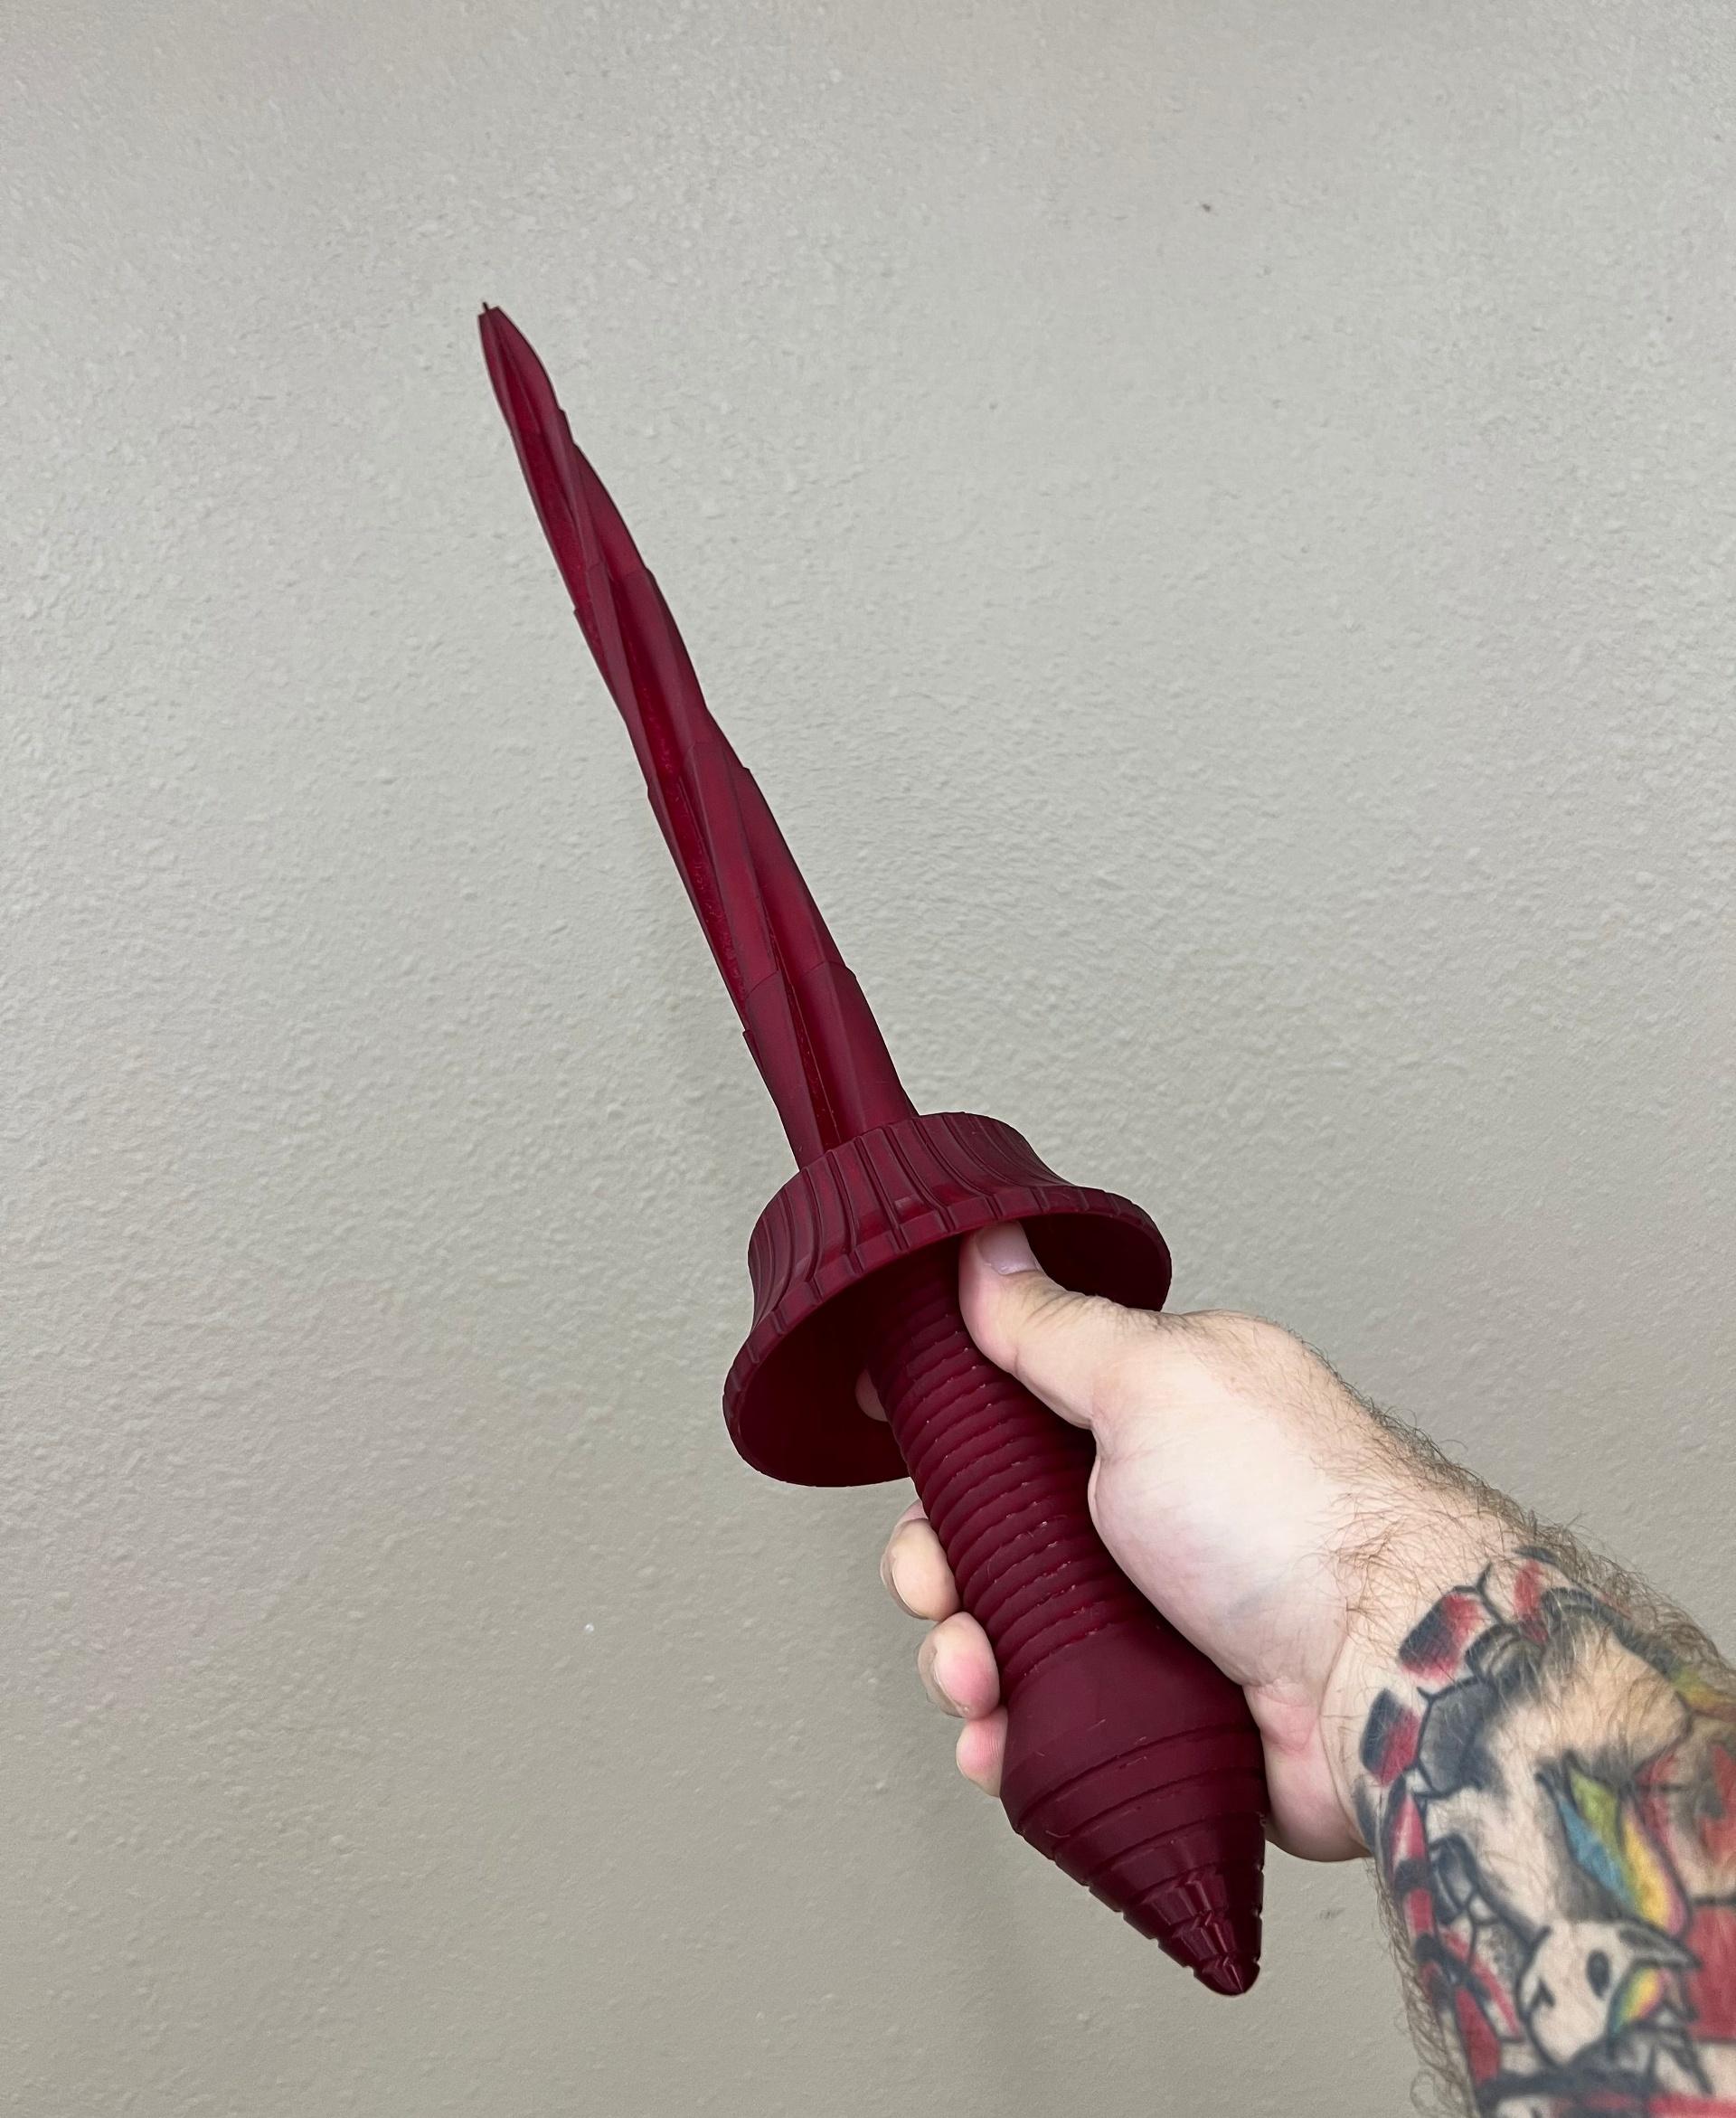 Weekly Roundup: Ten 3D Printable Things - The Coolest 3D Printed Swords 